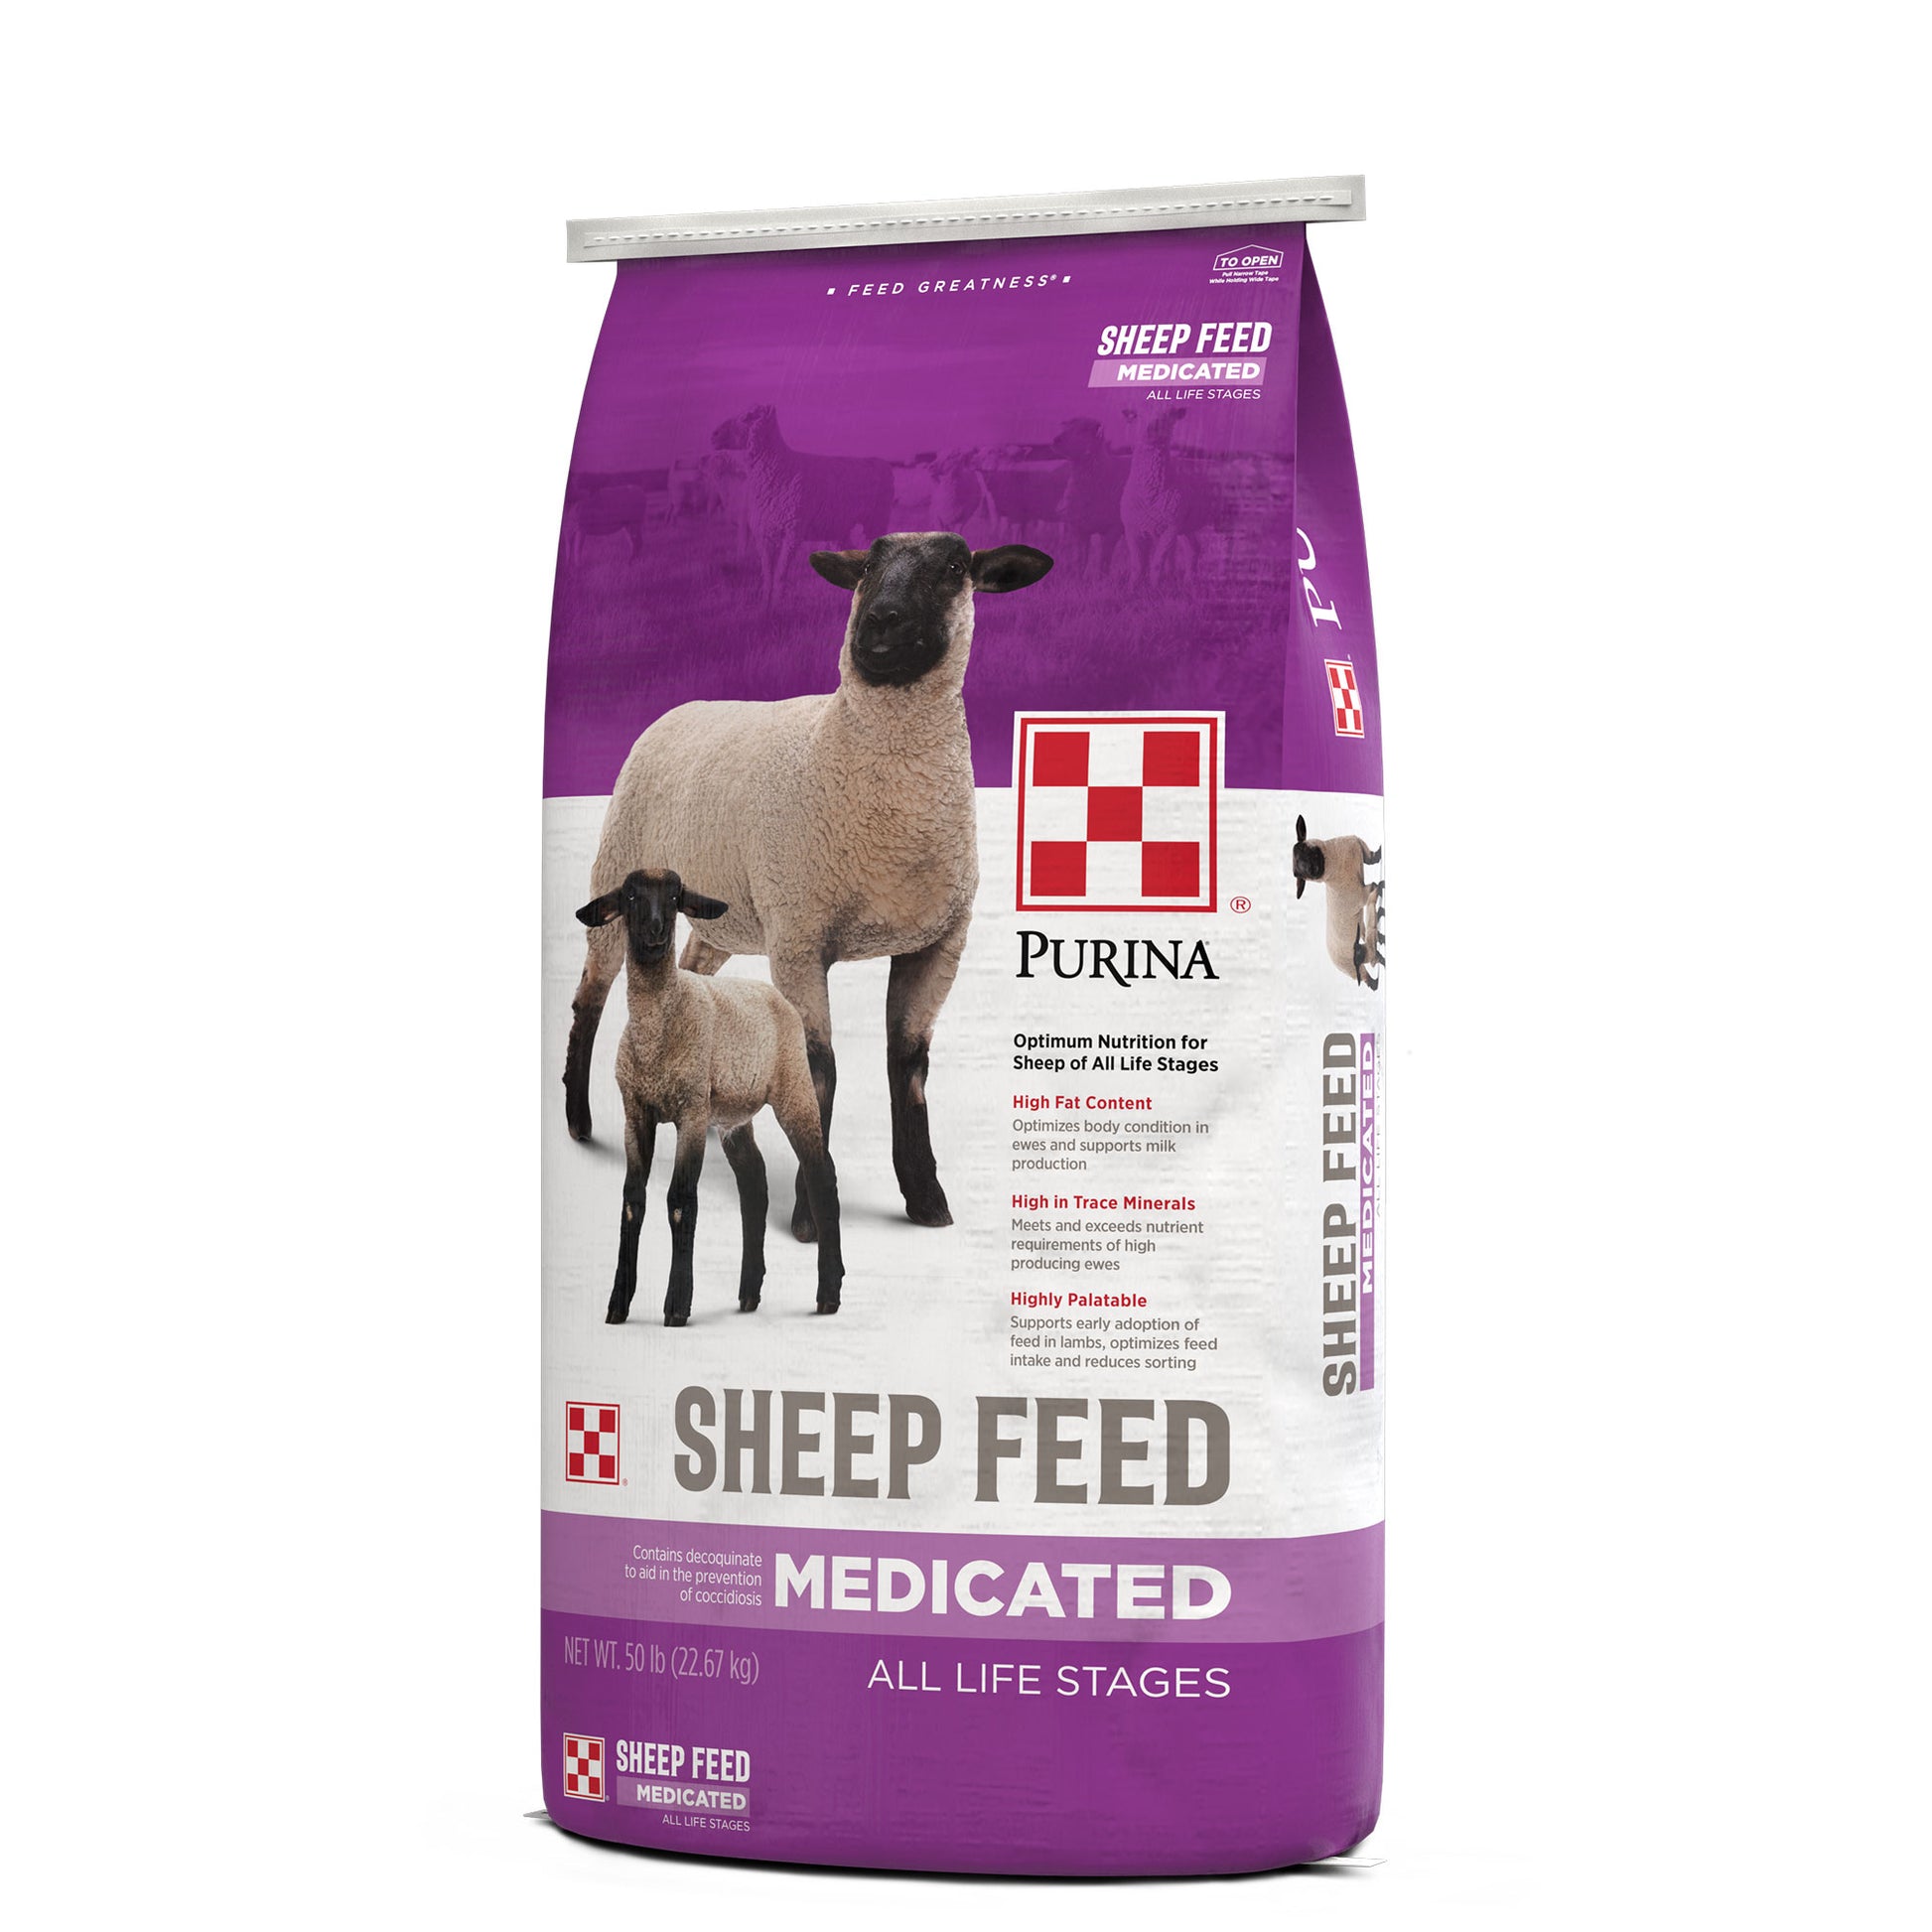 Purina Lamb & Ewe 15 DX30 Sheep Feed 50 Pound Bag Angled Right